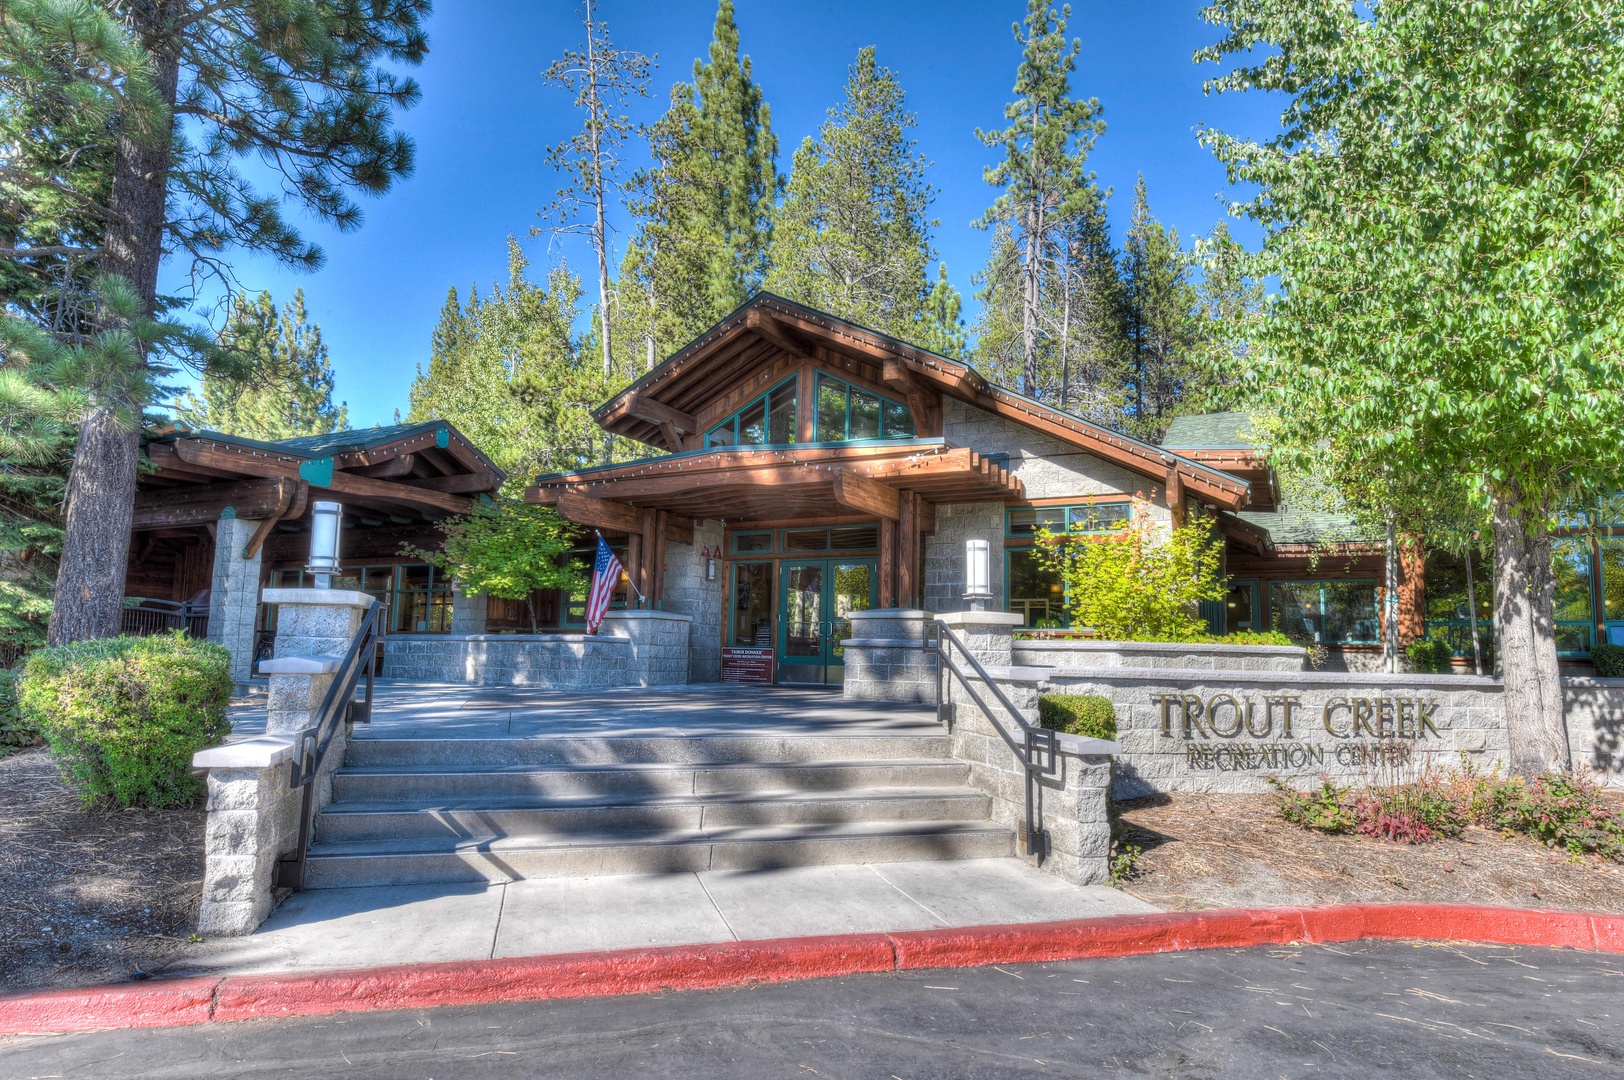 Tahoe Donner & Trout Creek Recreation Center Access